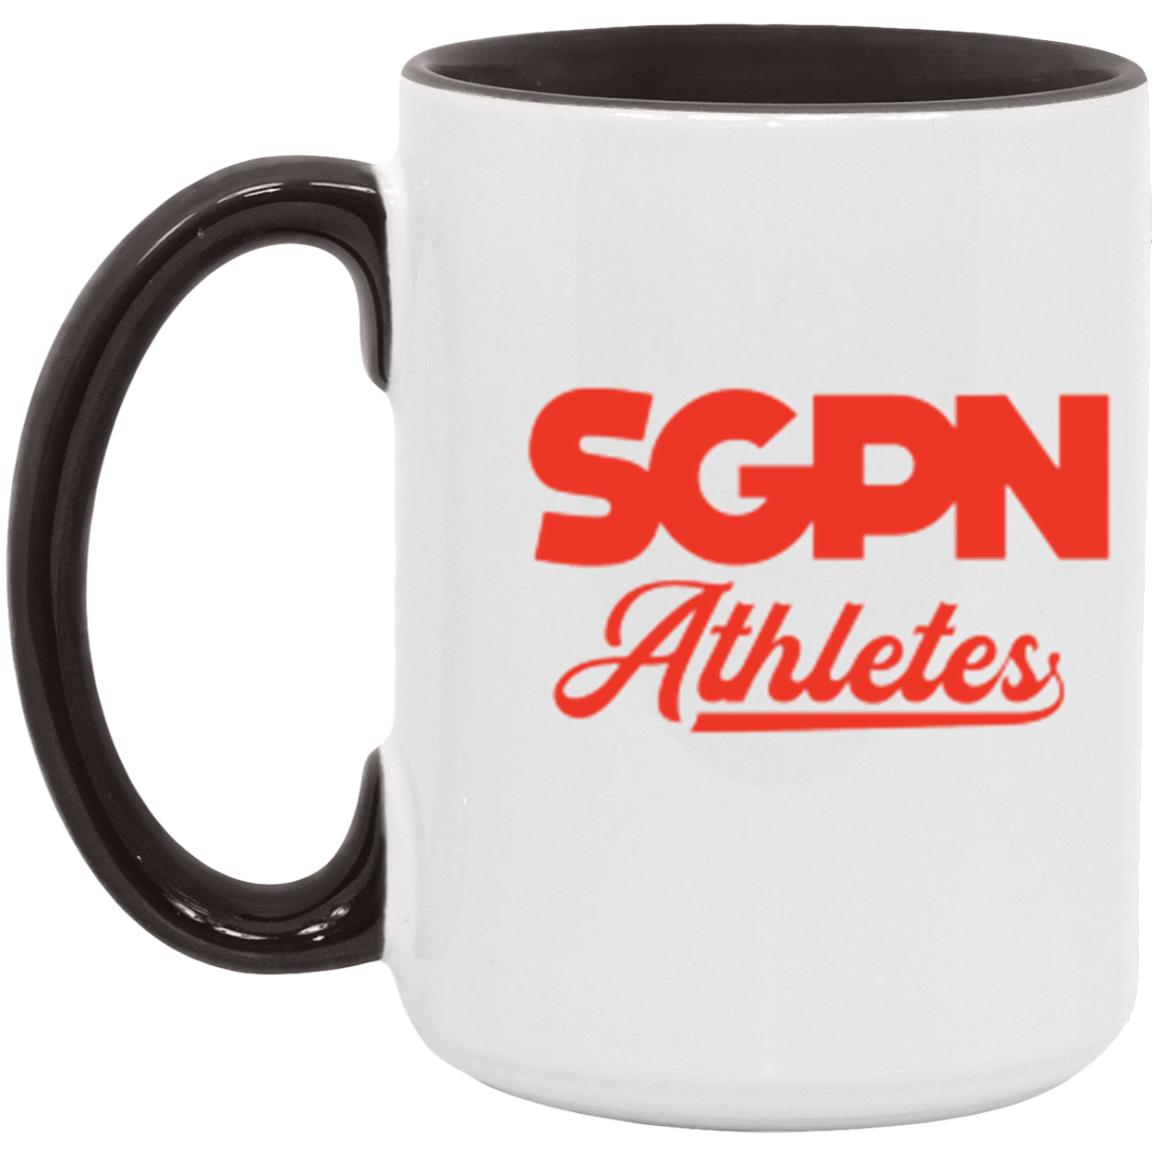 SGPN Athletes - 15oz. Accent Mug